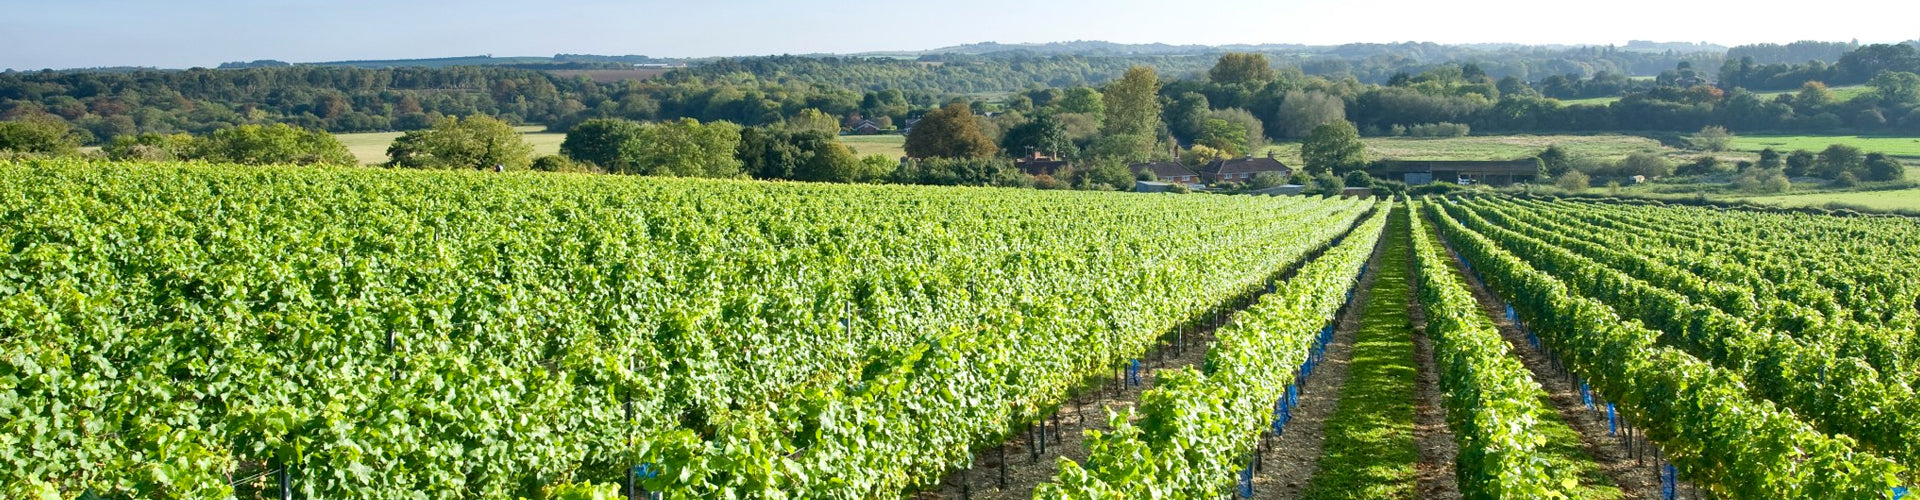 Cottonworth Vineyards in Hampshire, England